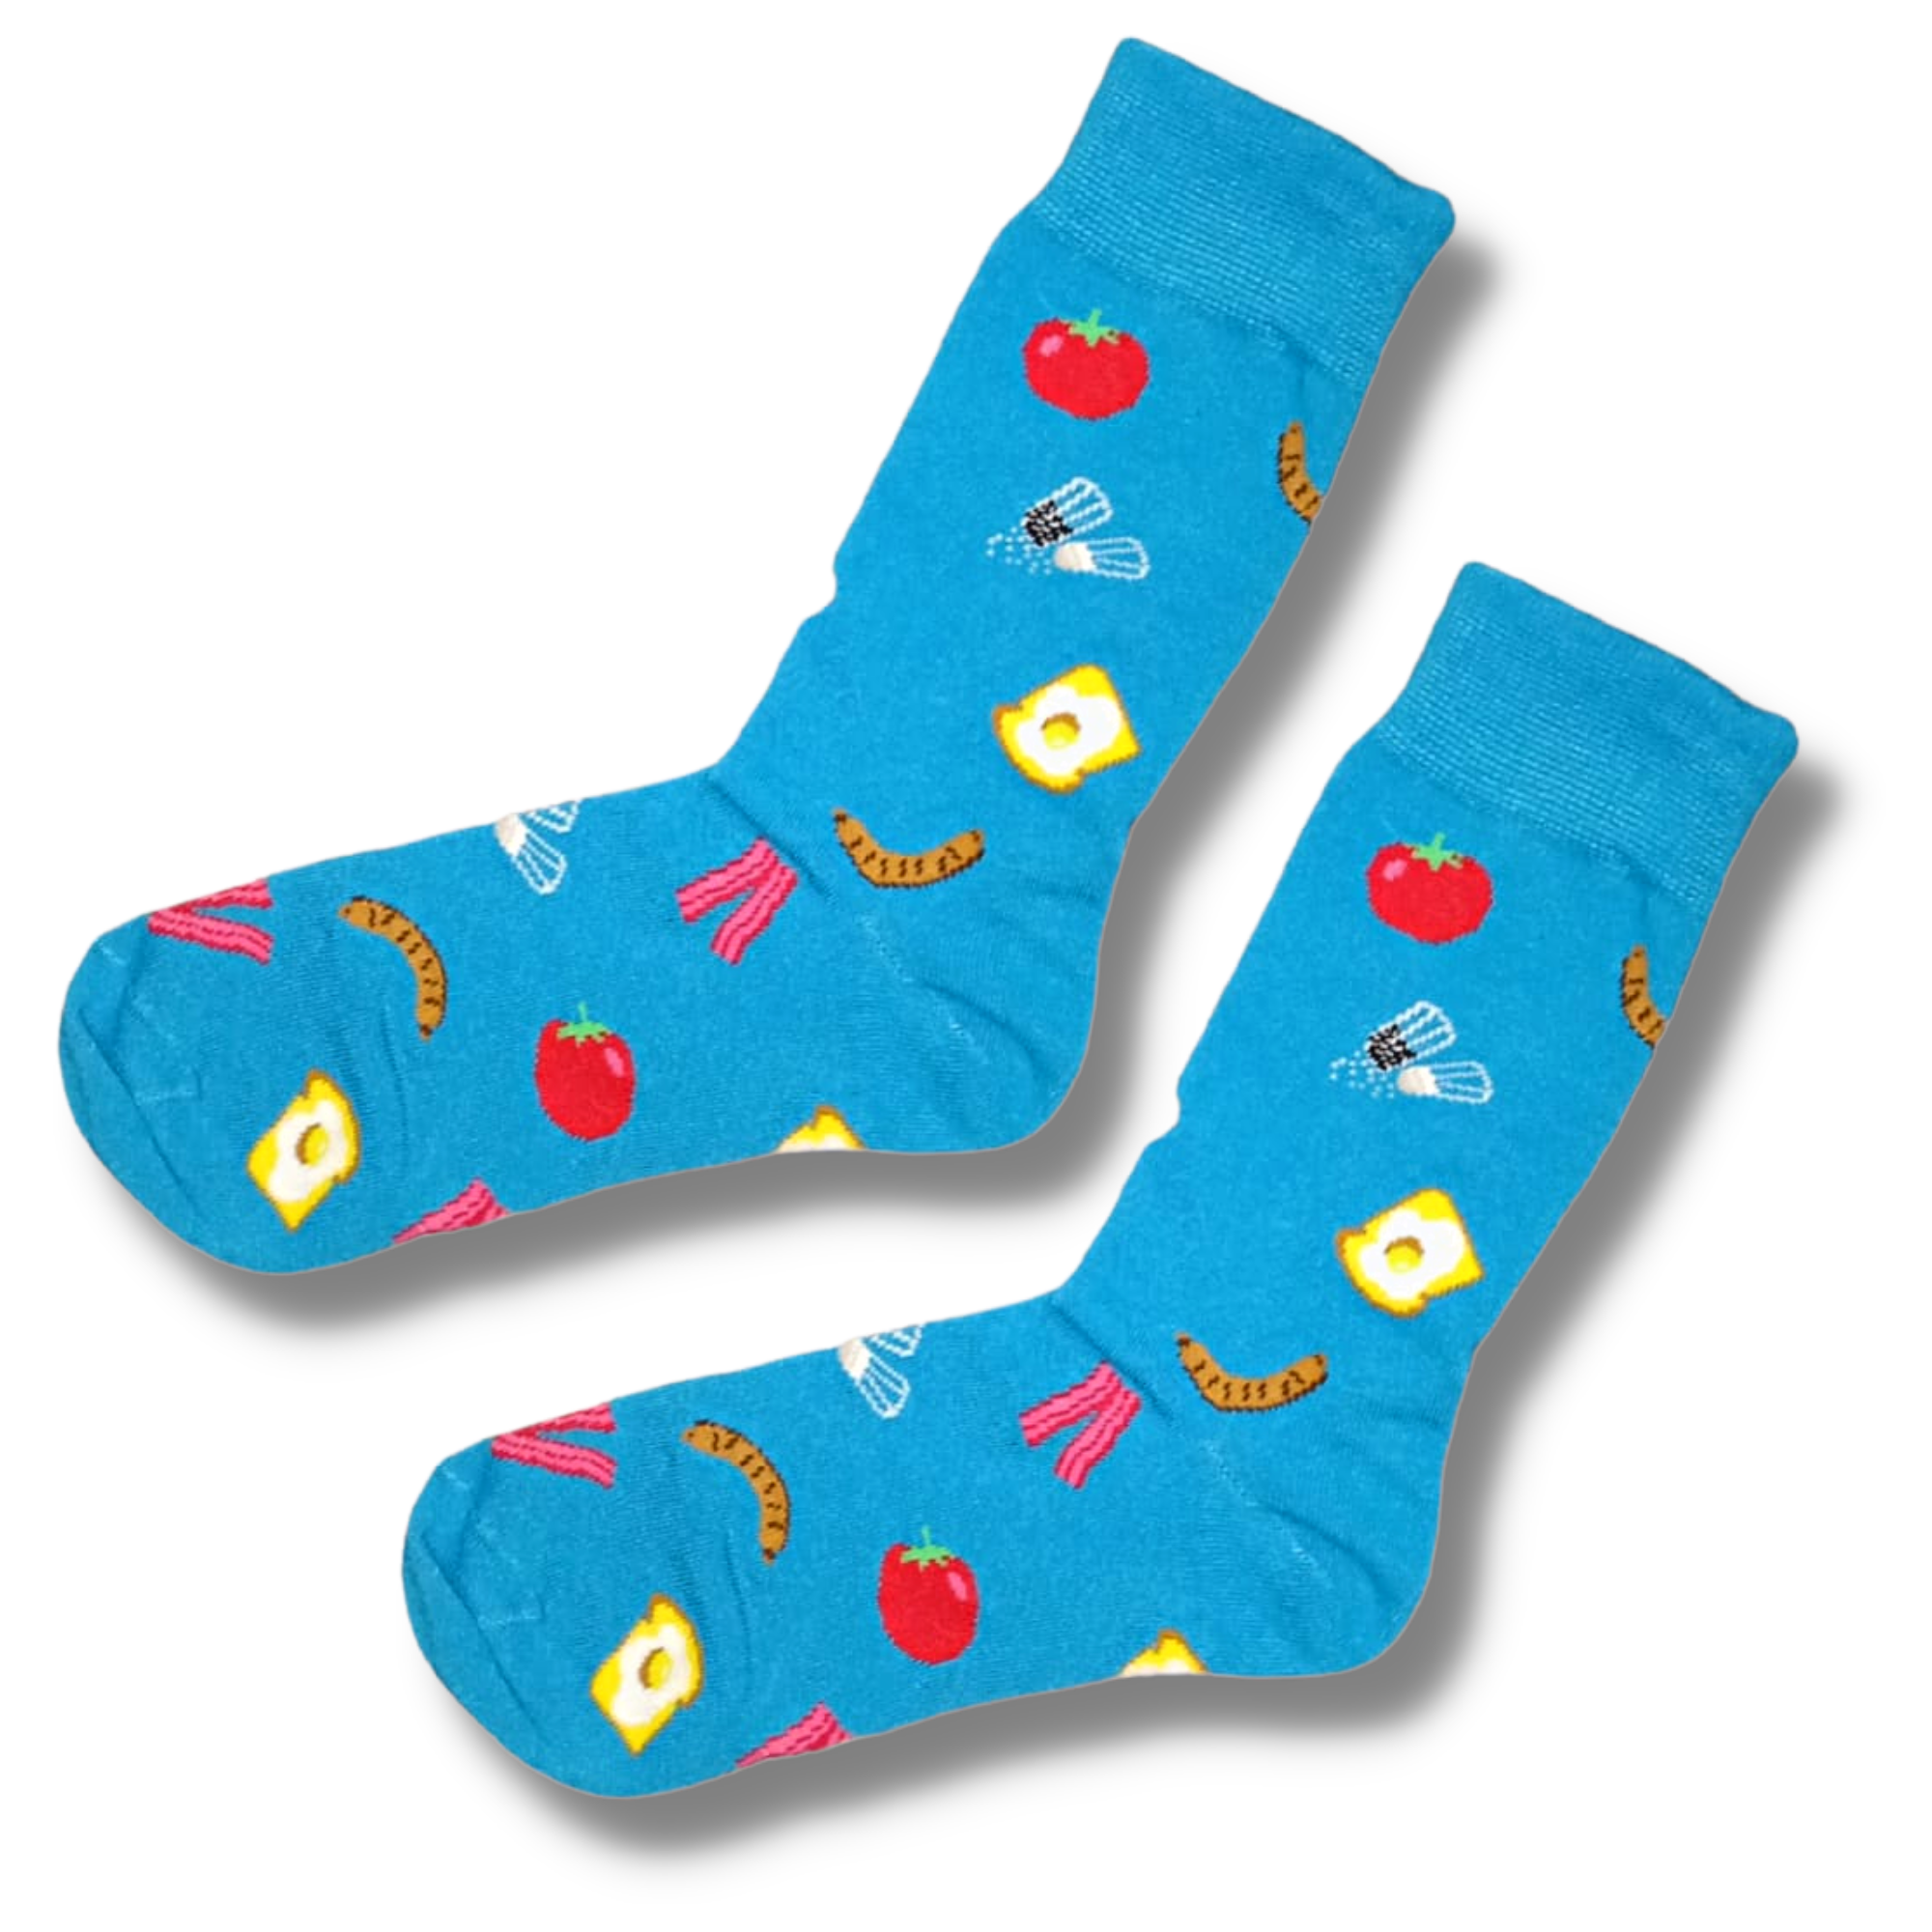 Breakfast in Bed Men's Socks (Size 9-12)